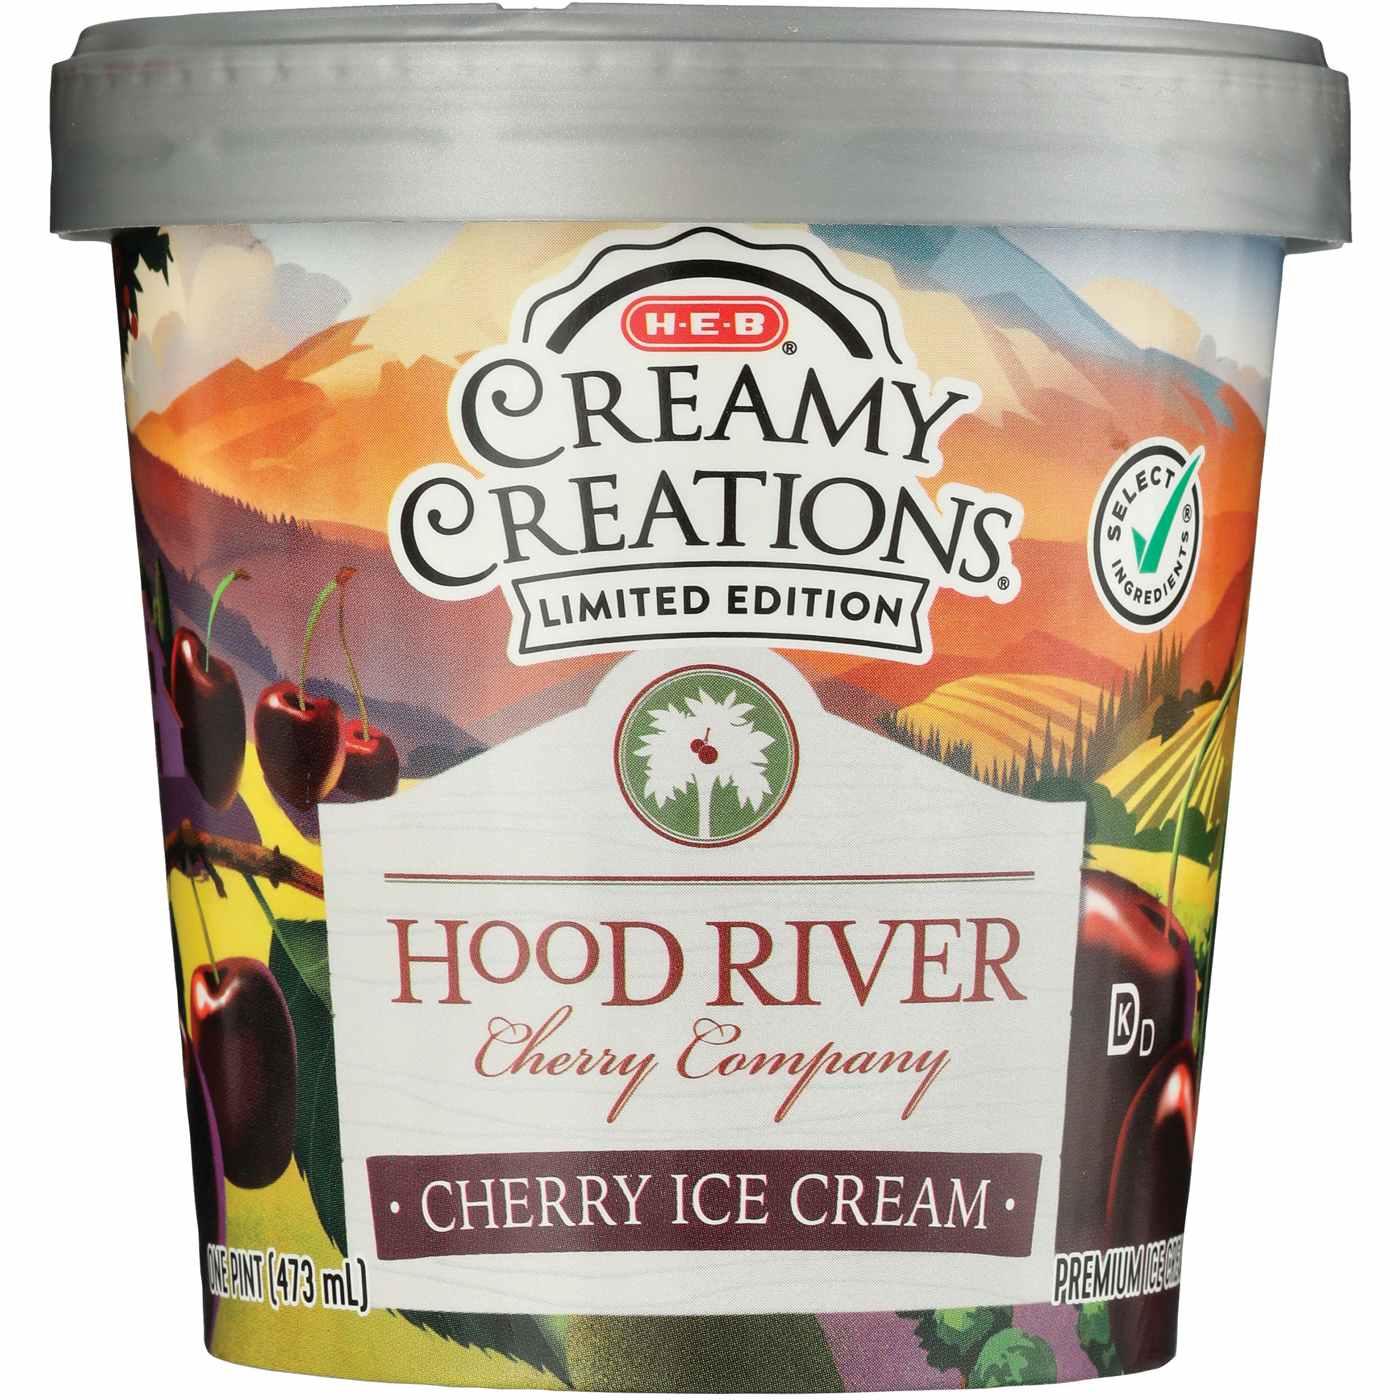 H-E-B Creamy Creations Hood River Cherry Company Cherry Ice Cream; image 2 of 2